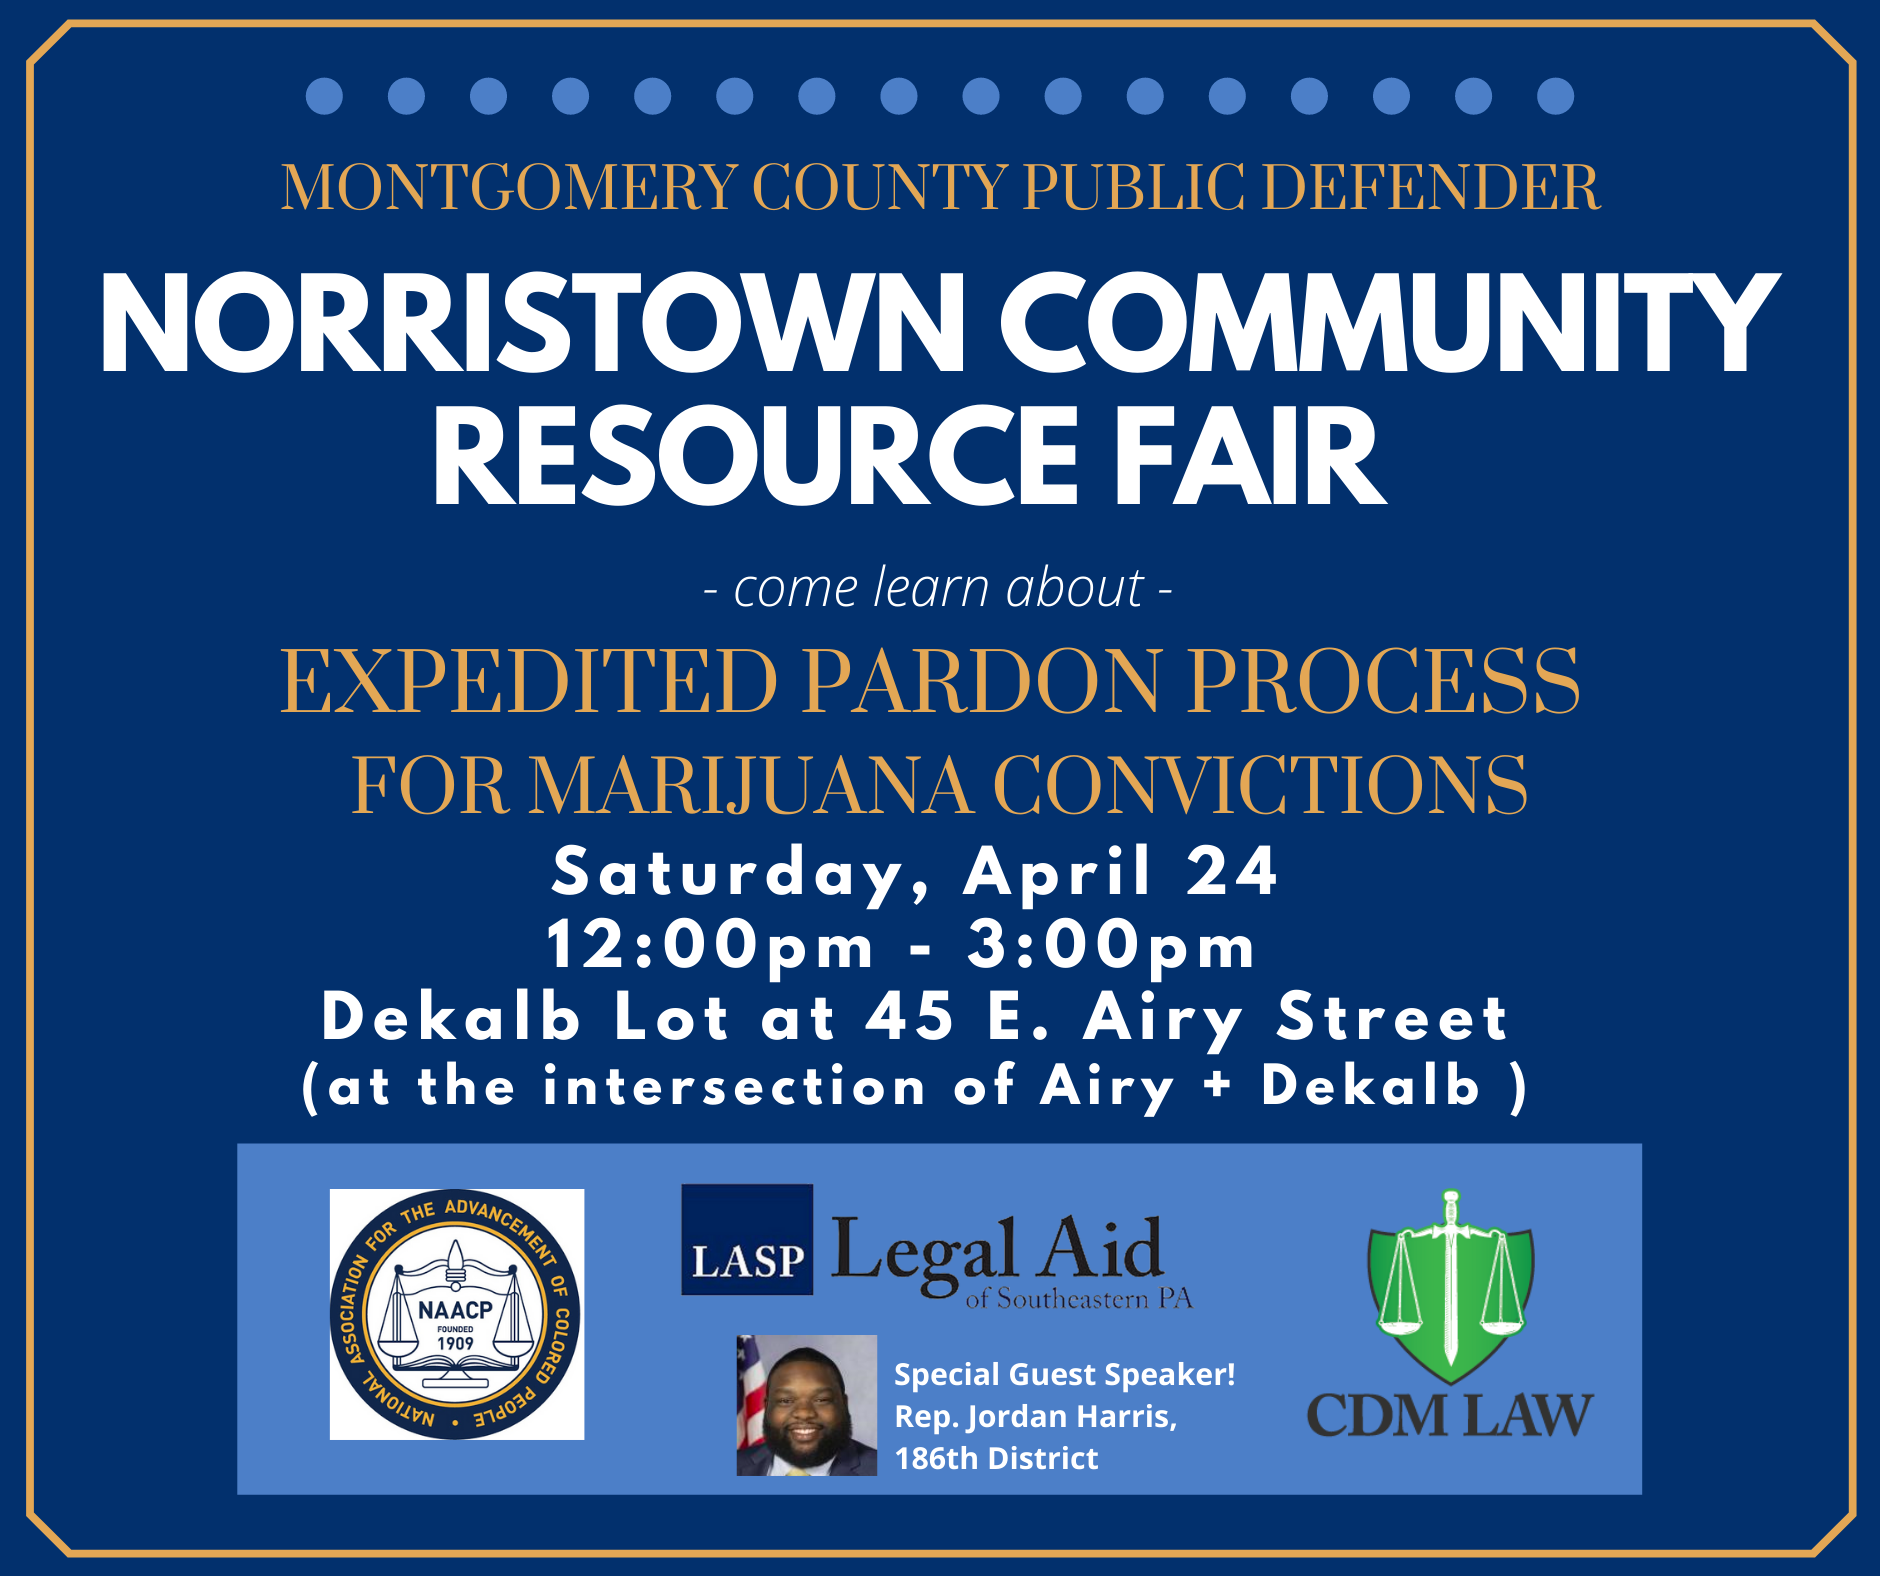 Norristown Community Resource Fair is Saturday